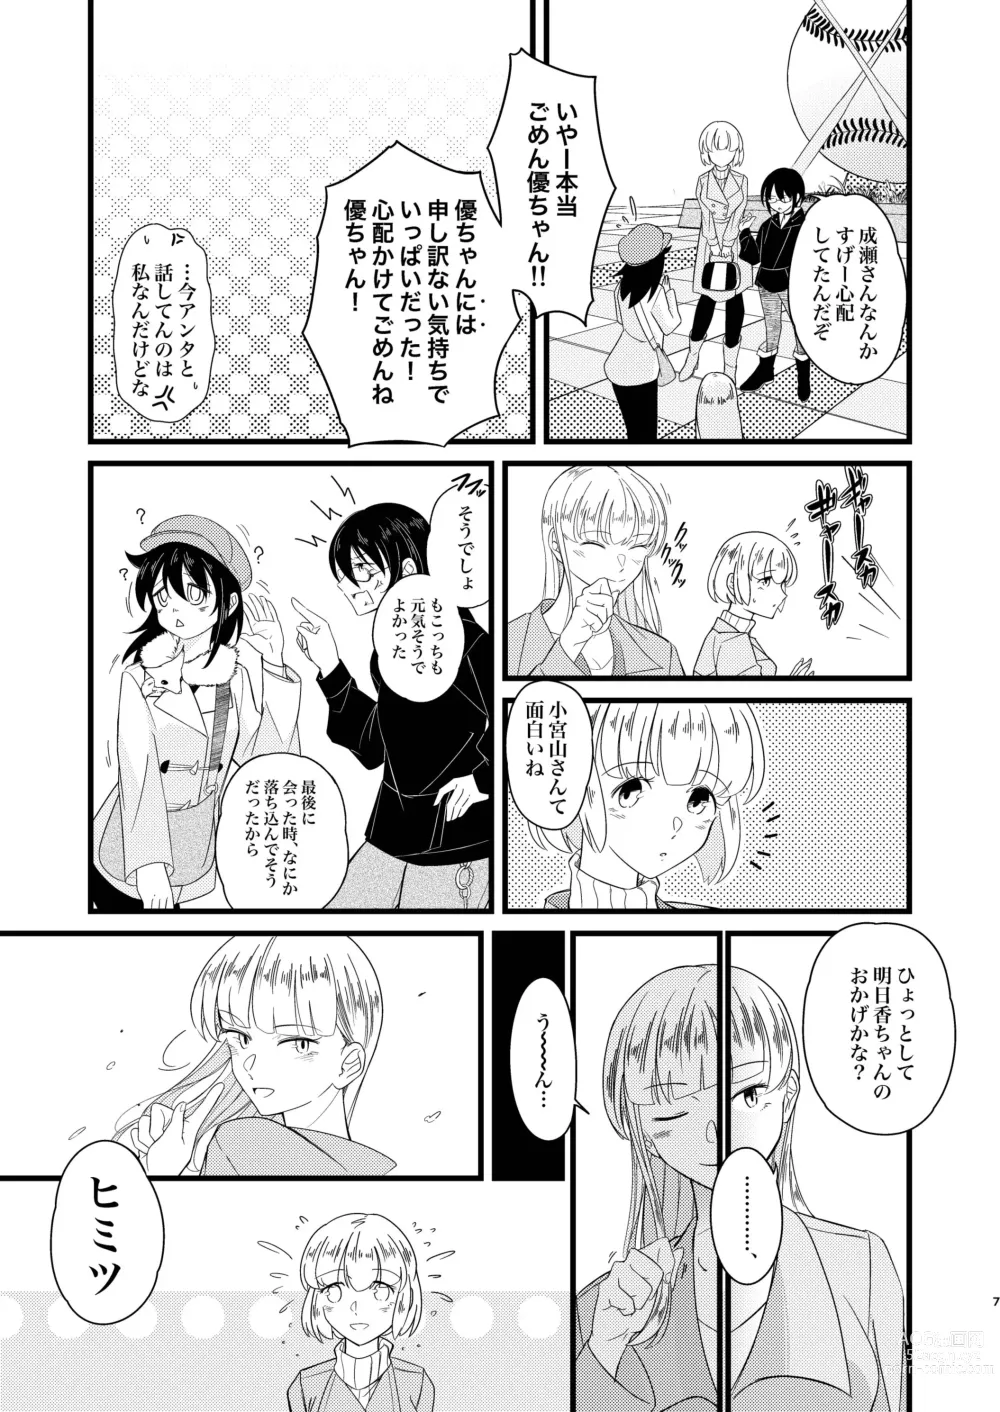 Page 7 of doujinshi Saikau